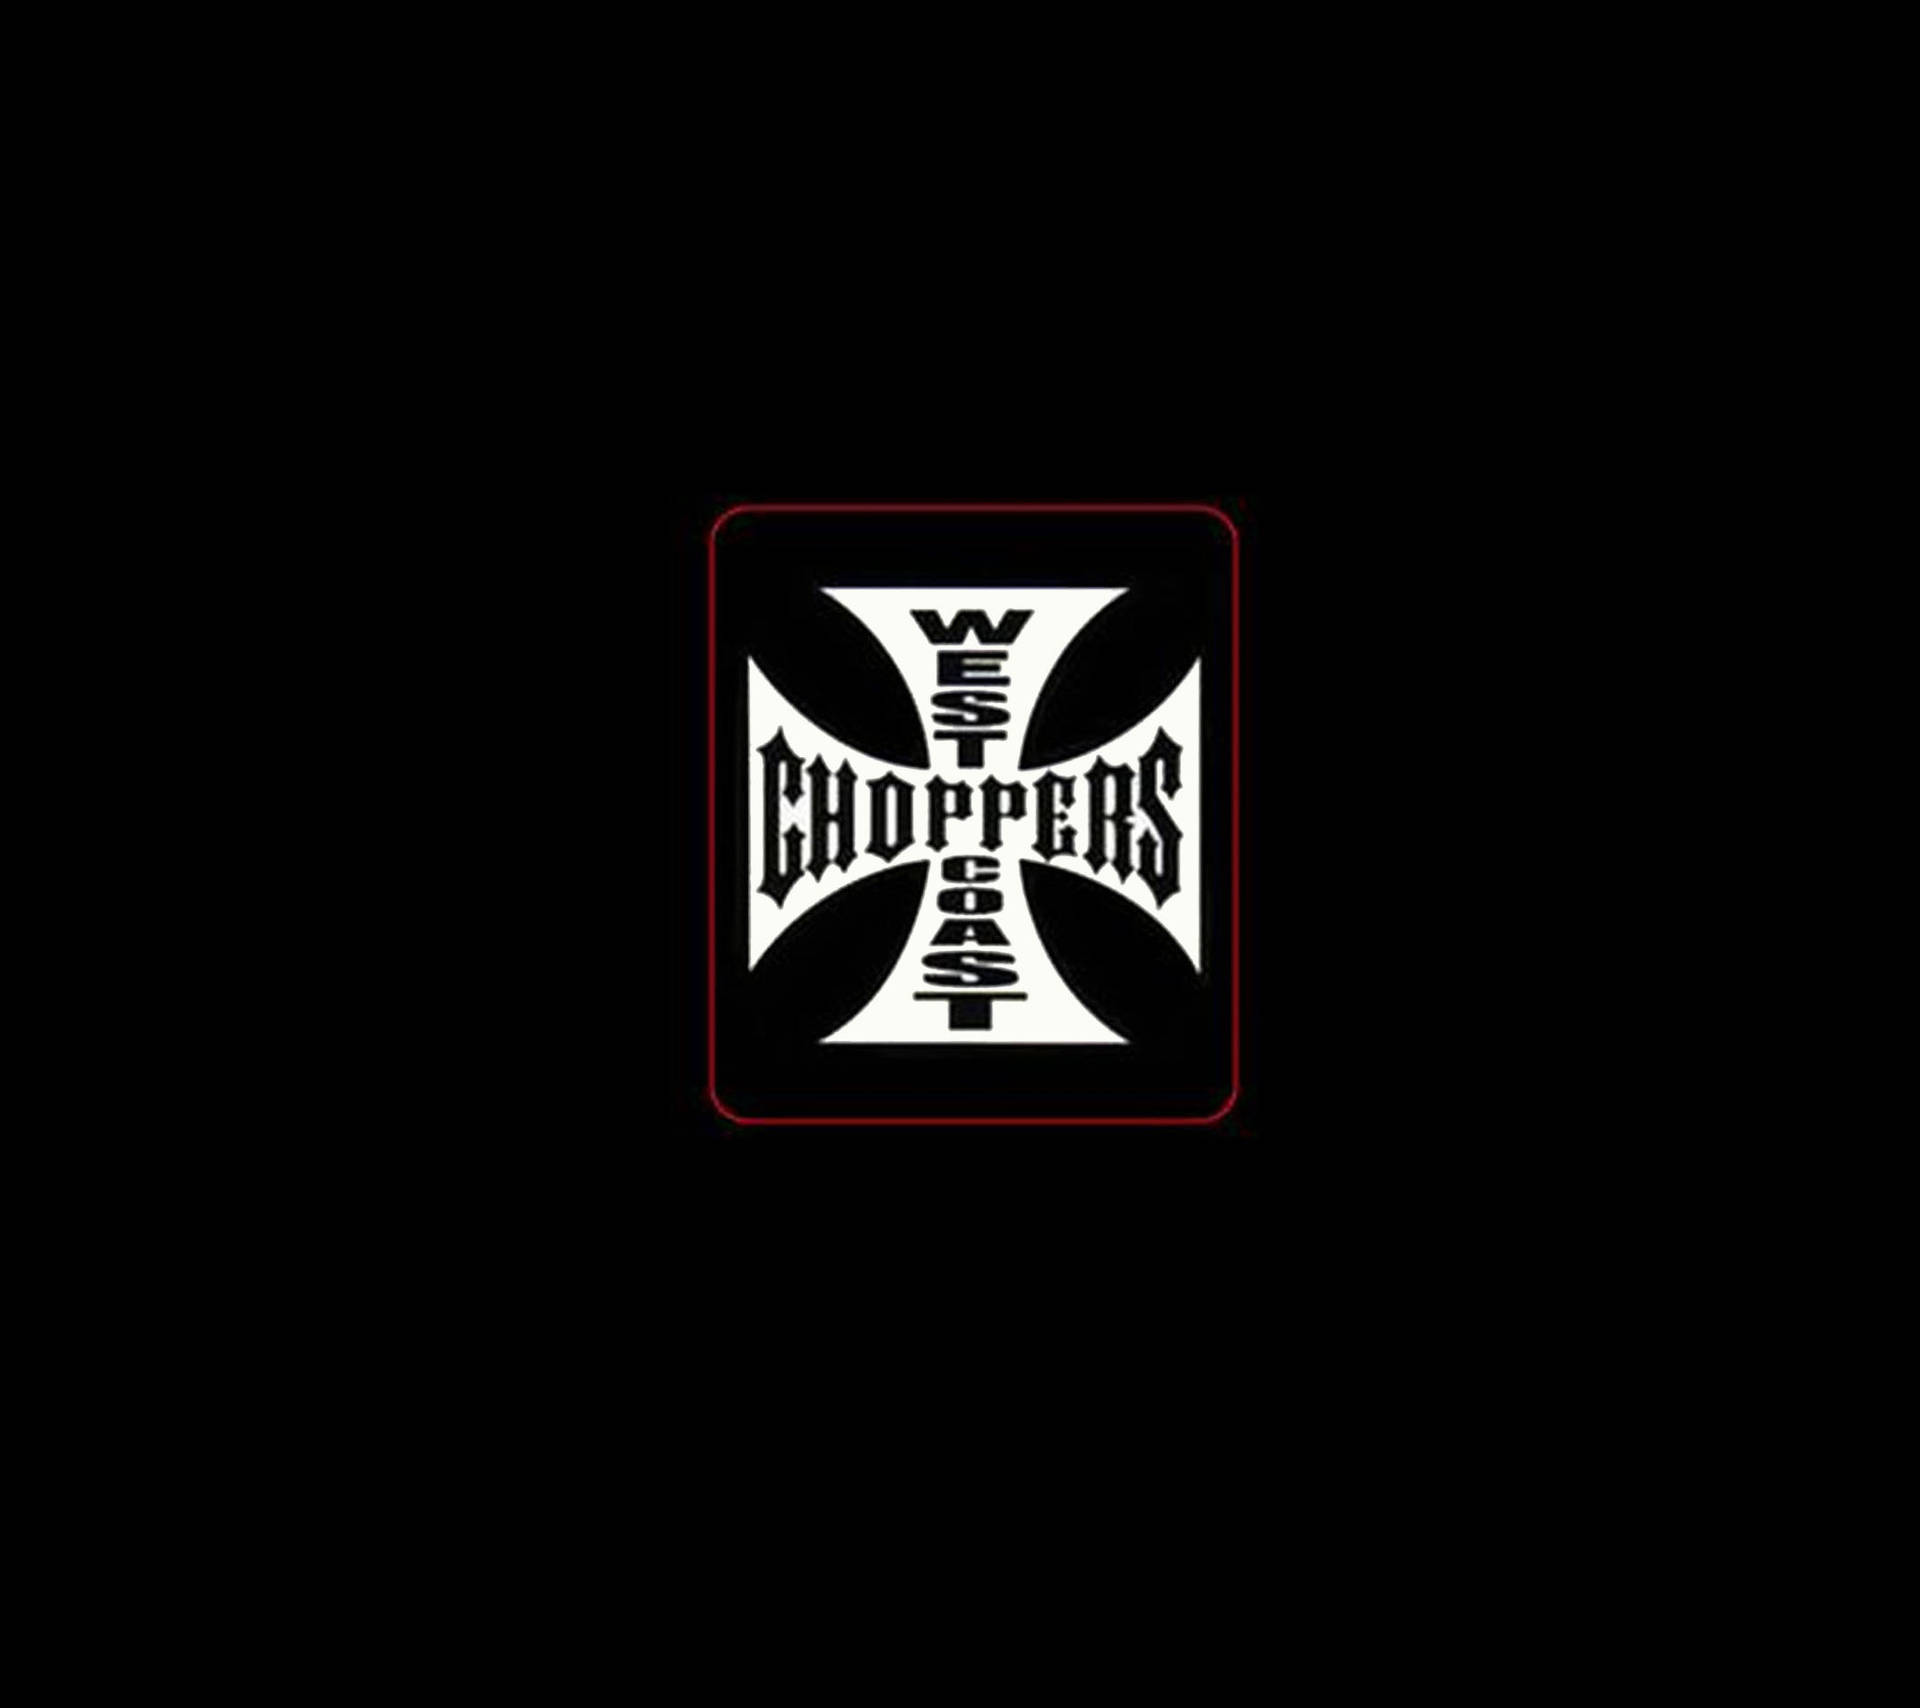 West Coast Choppers-emblem Wallpaper